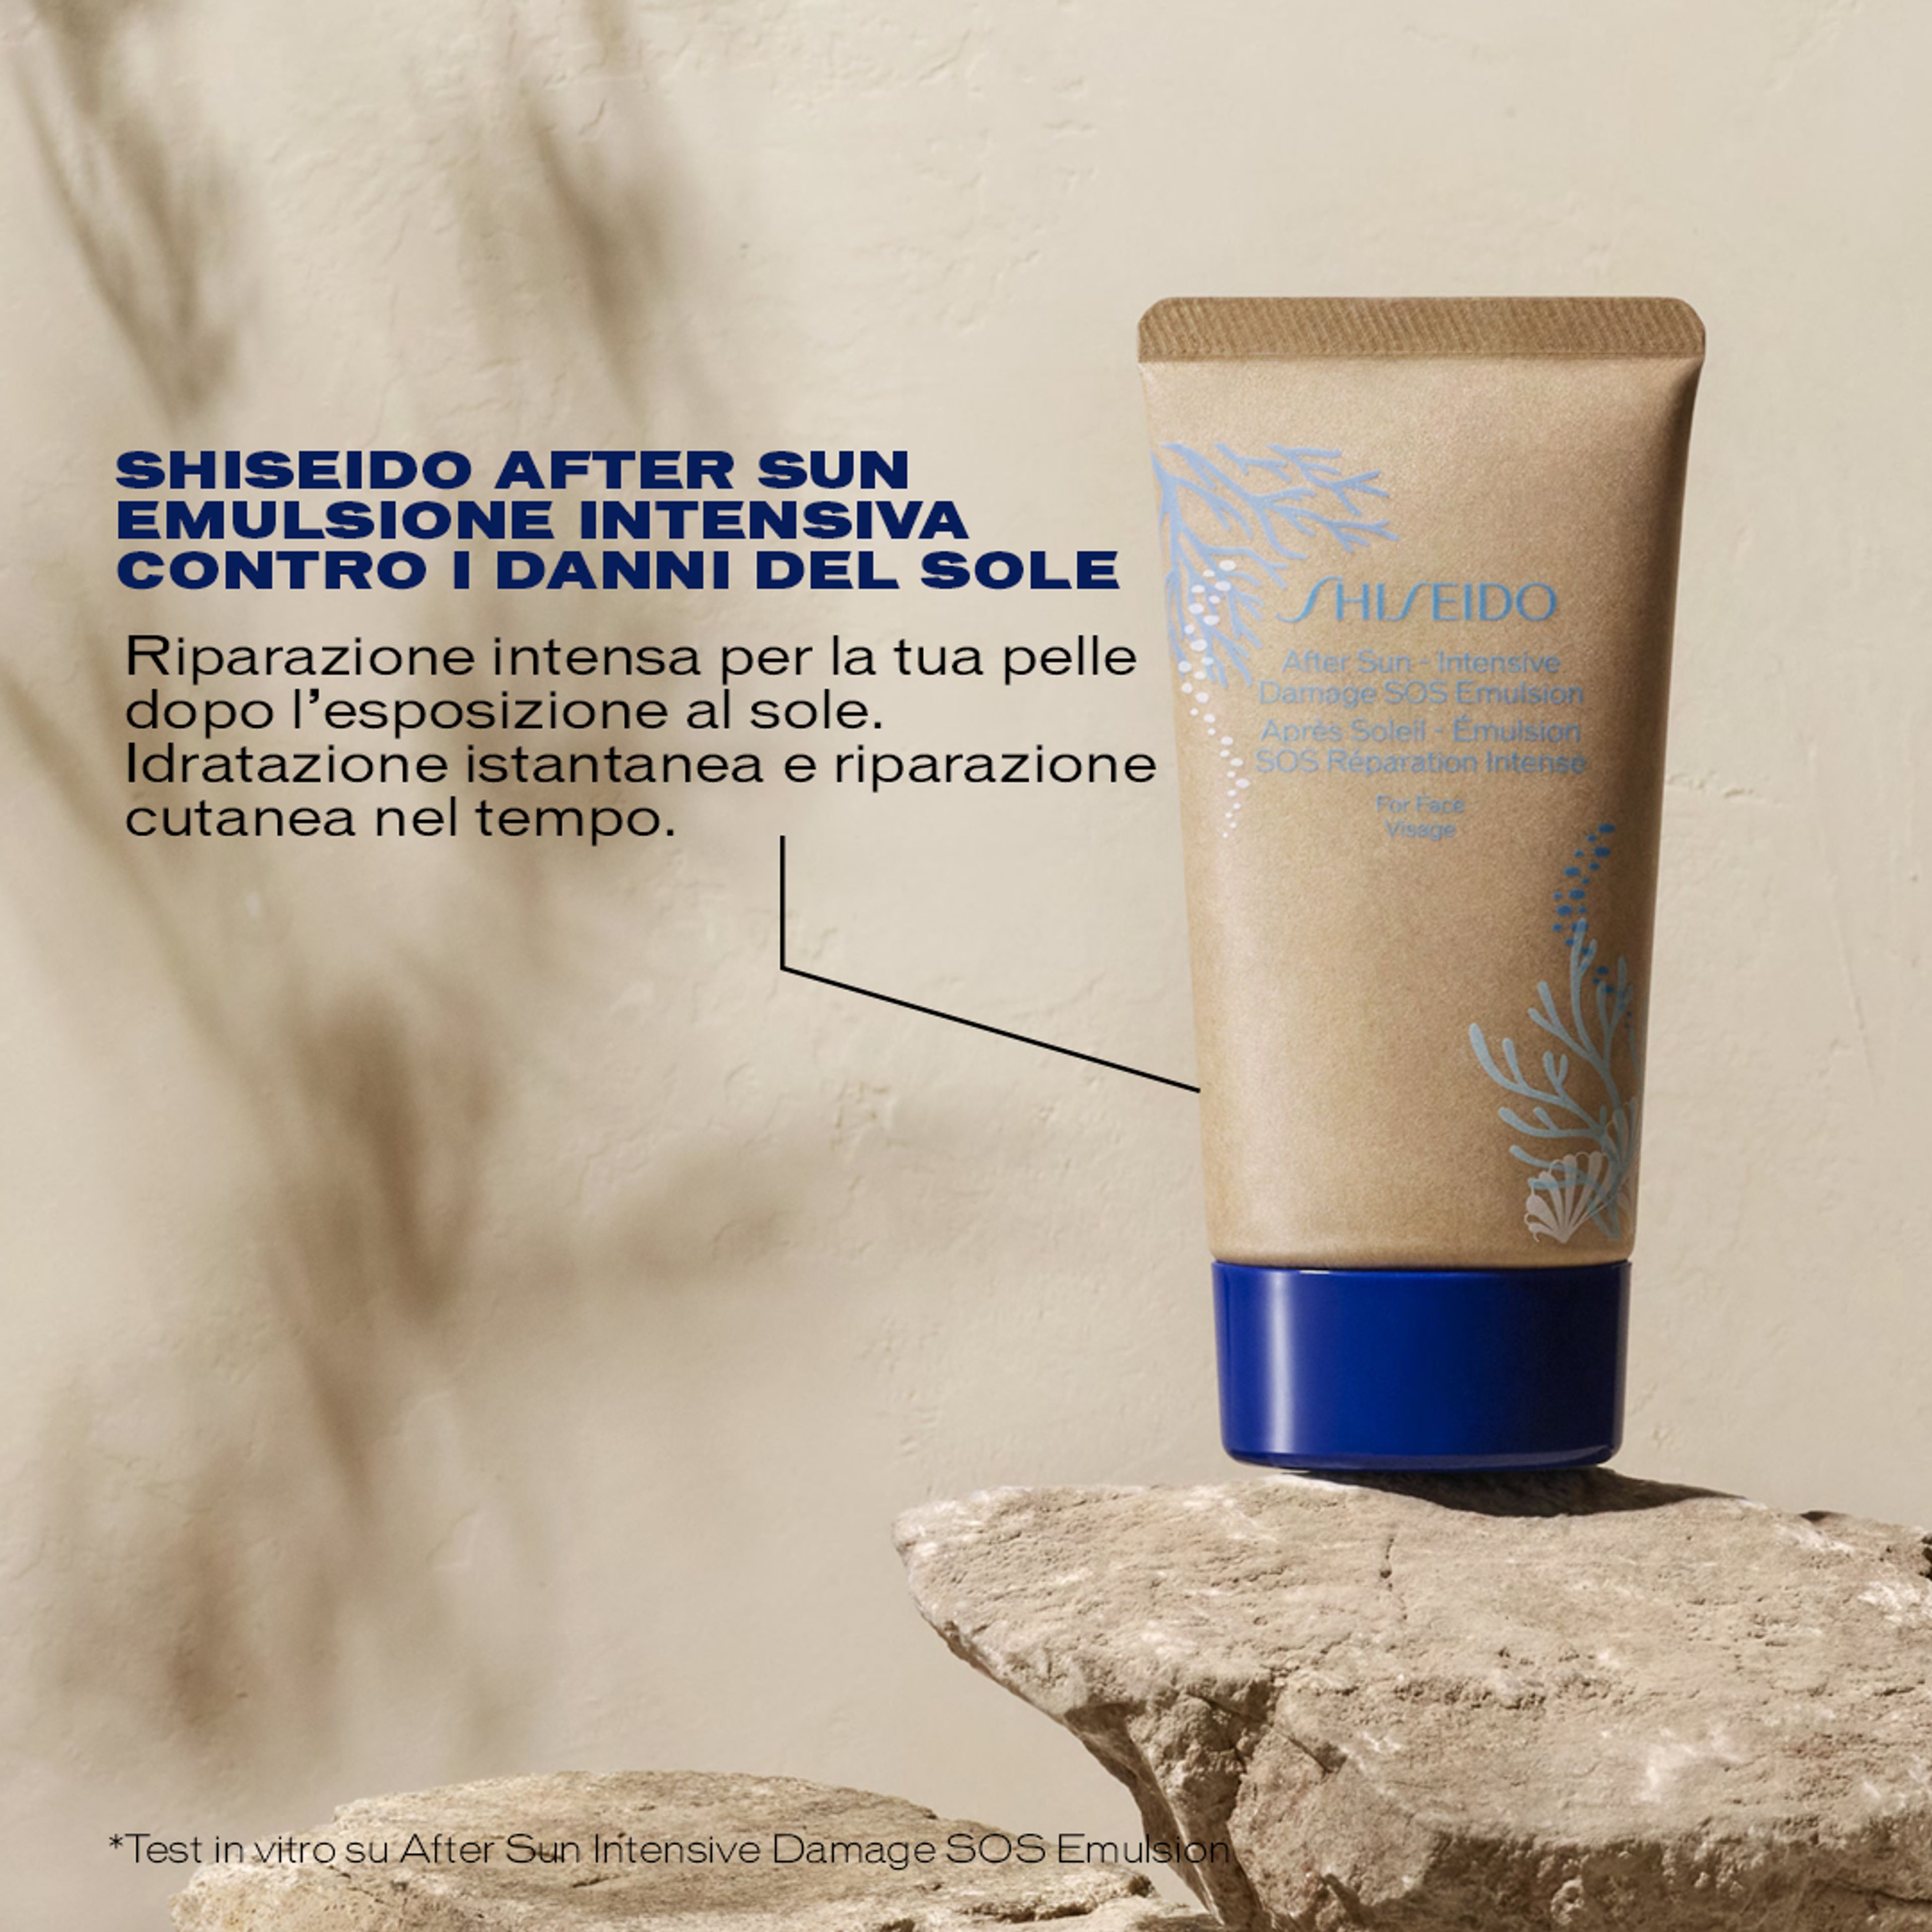 After Sun - Intensive Damage Sos Emulsion Shiseido 2